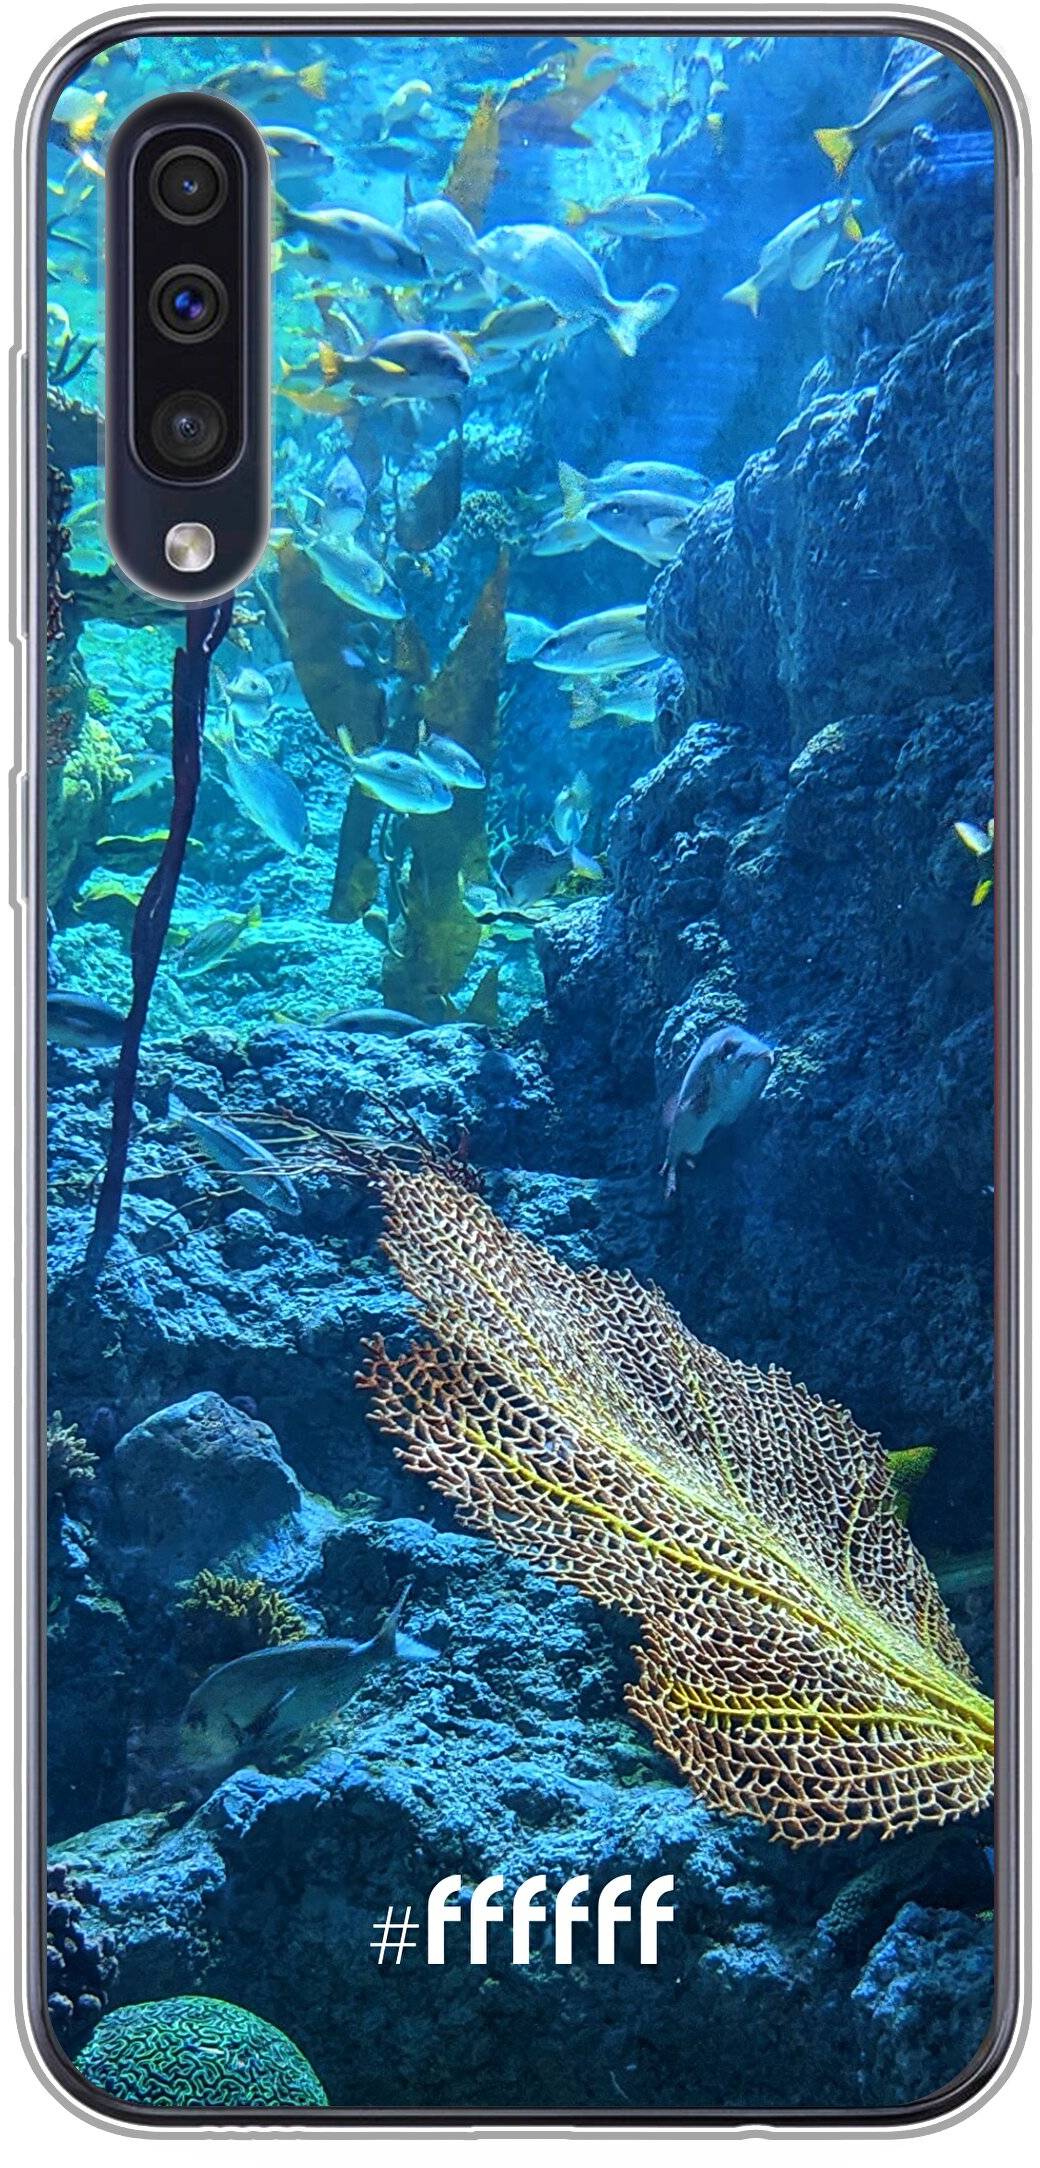 Coral Reef Galaxy A50